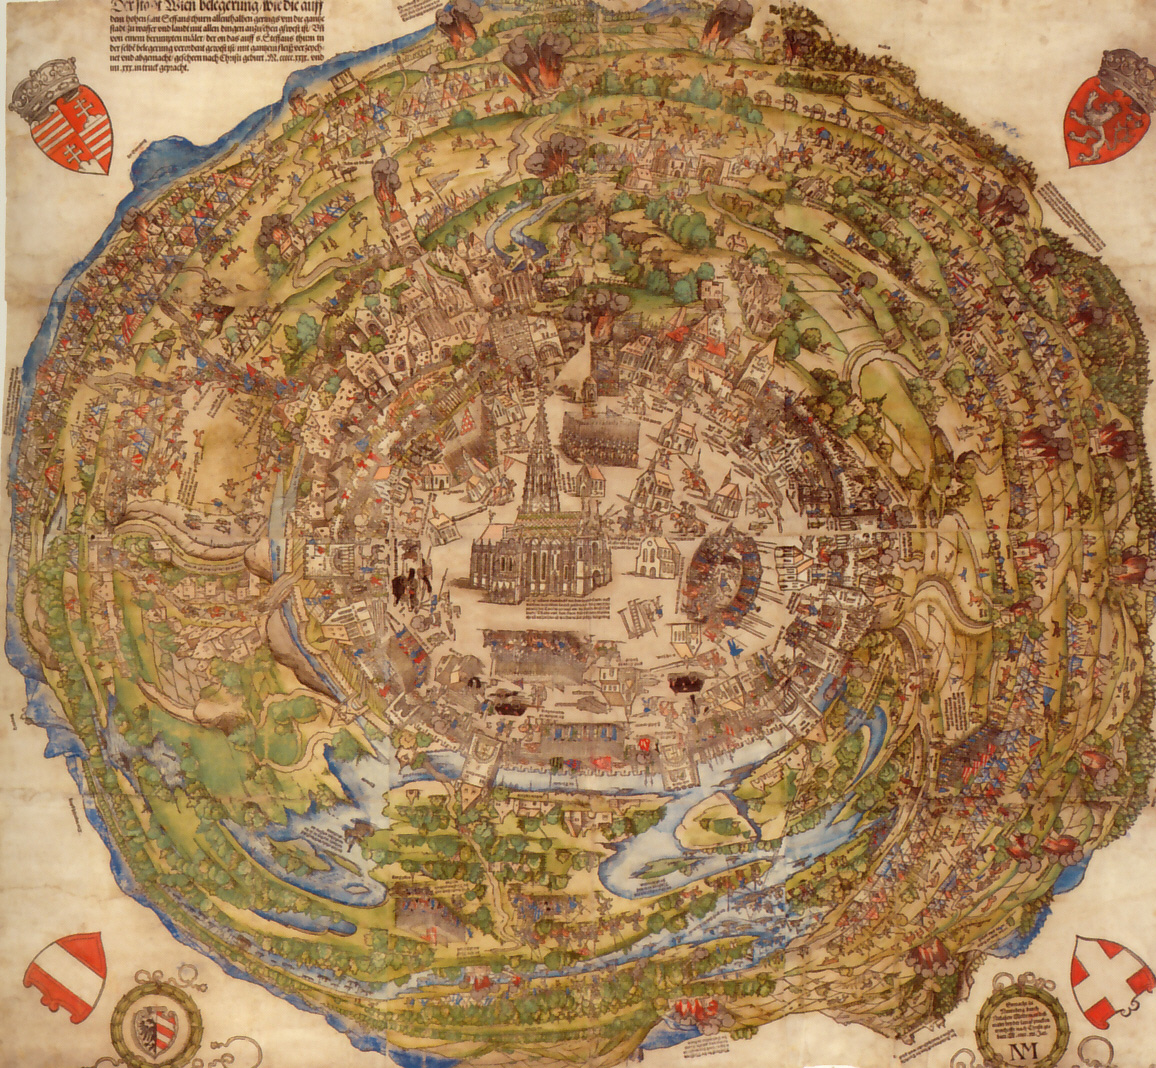 Siege of Vienna: Suleiman I attacks the city